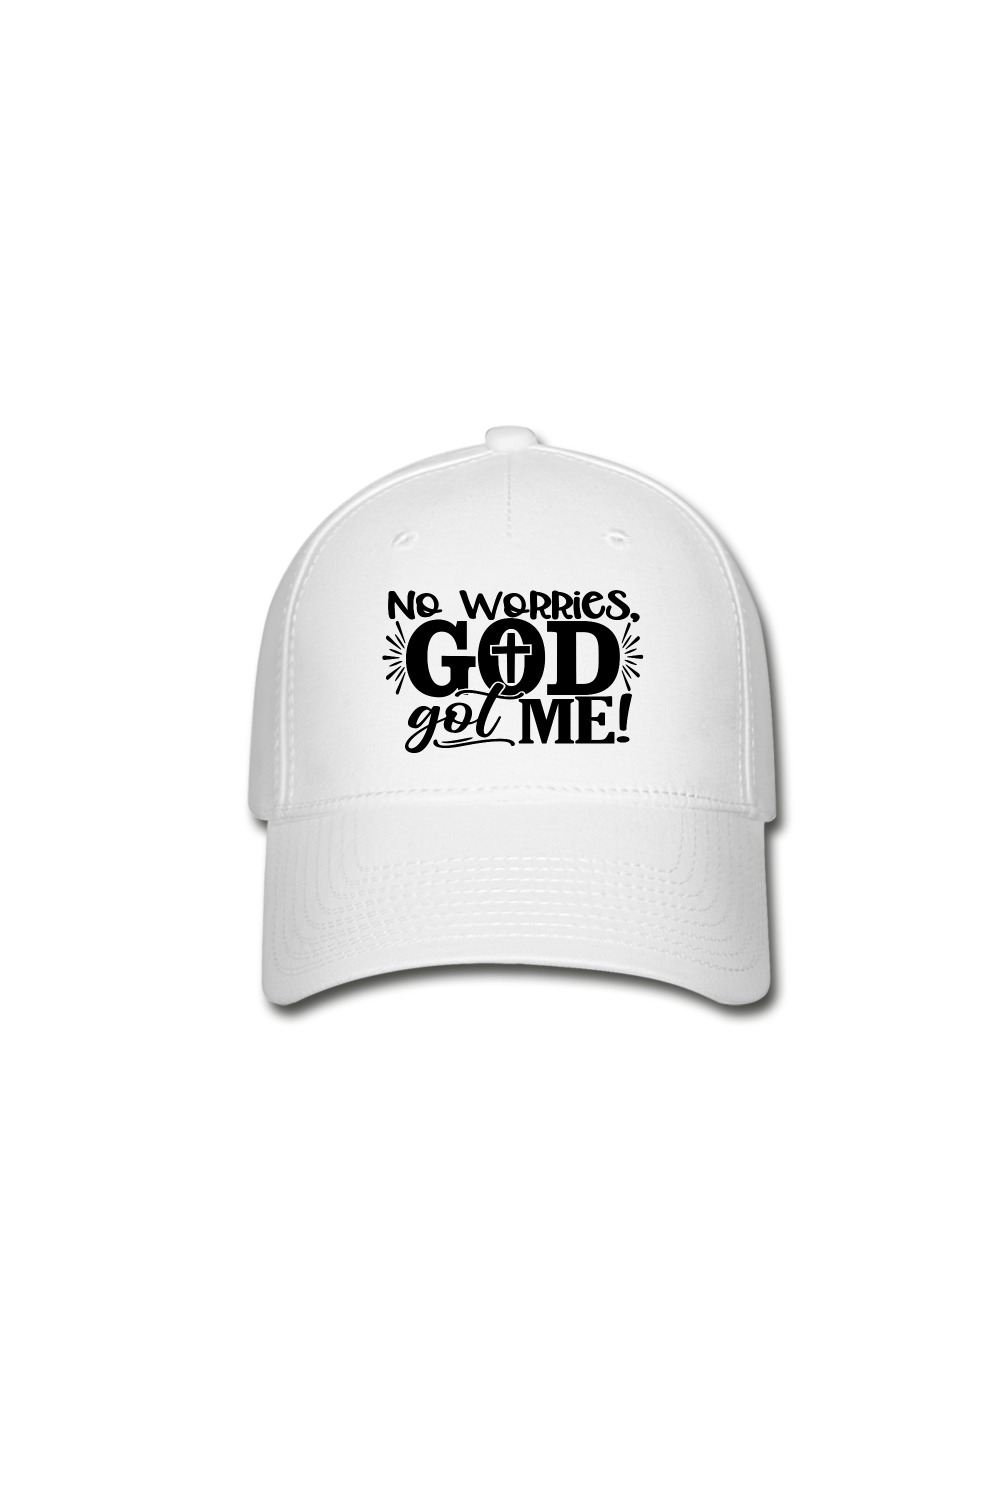 Unisex Adult God Got Me Baseball Cap - white - NicholesGifts.online